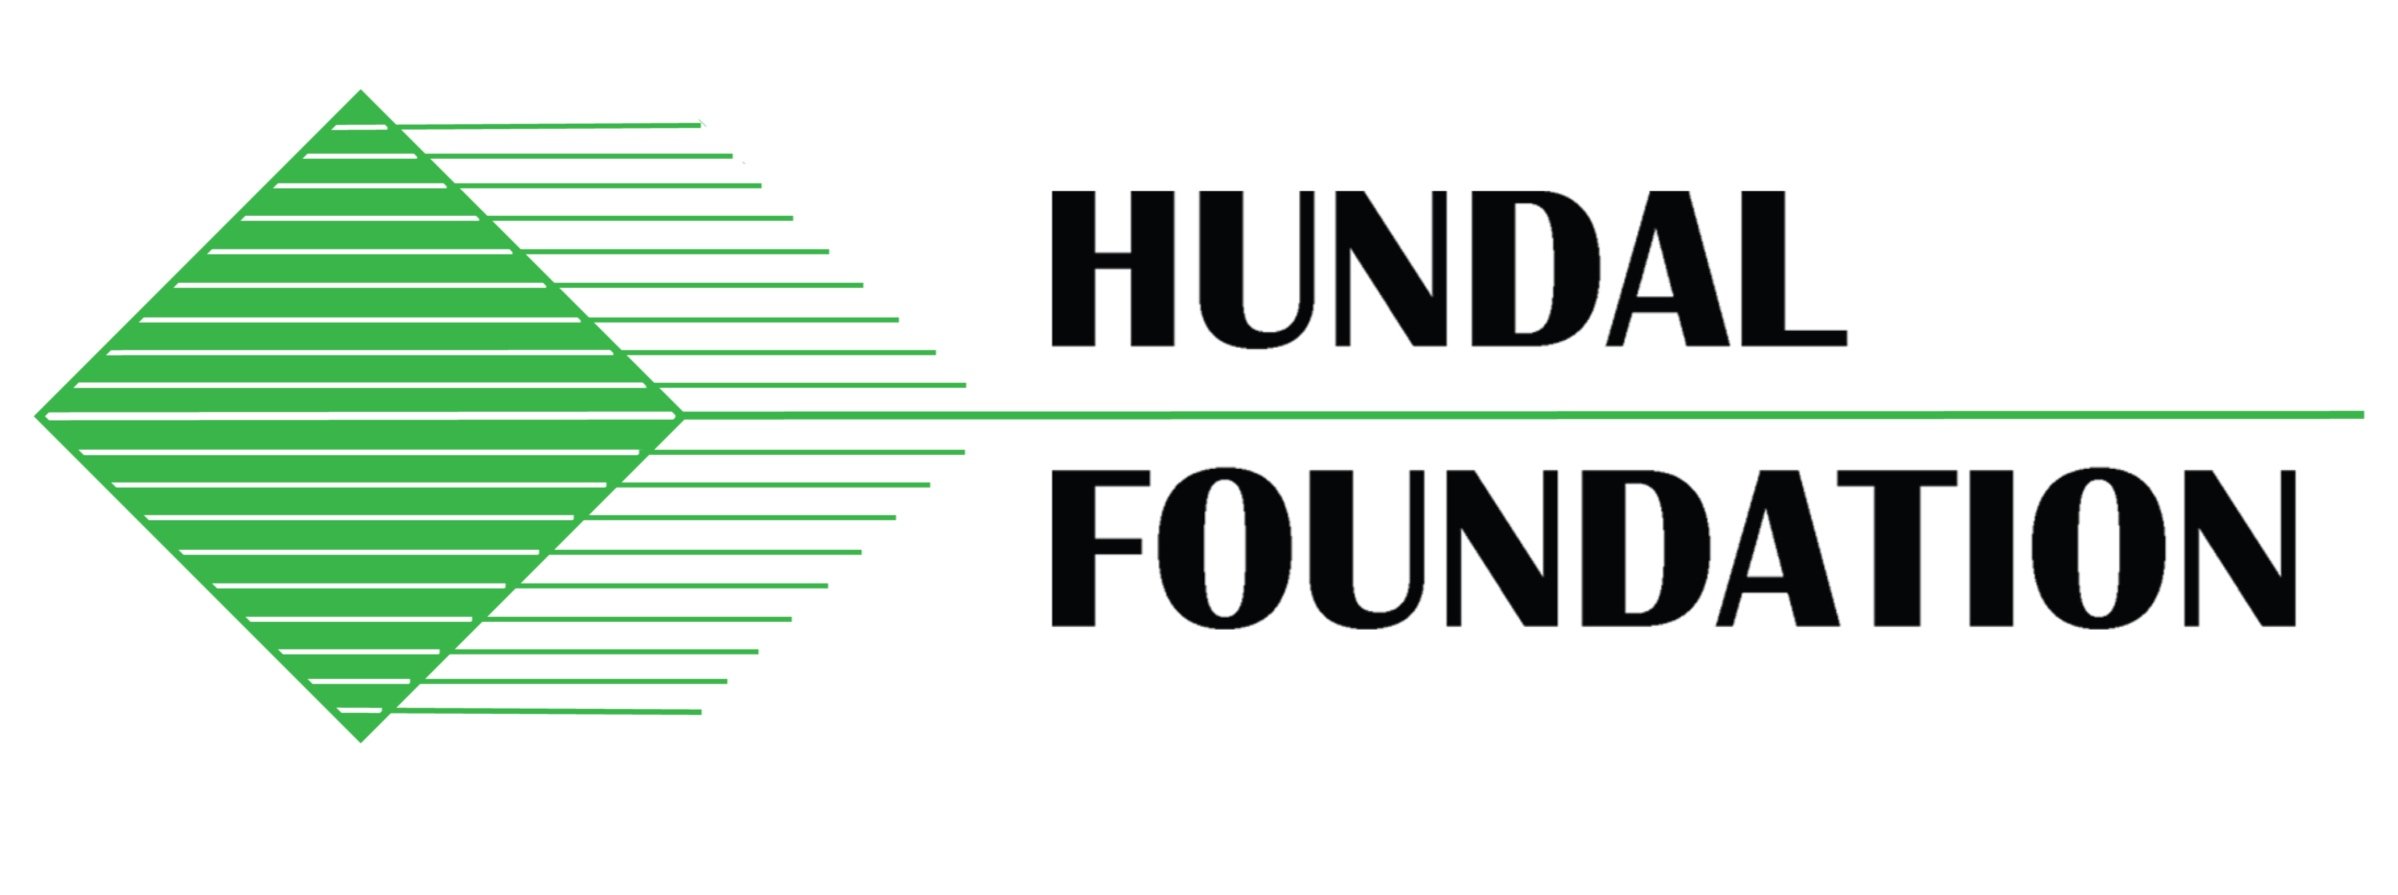 Hundal-Foundation.png